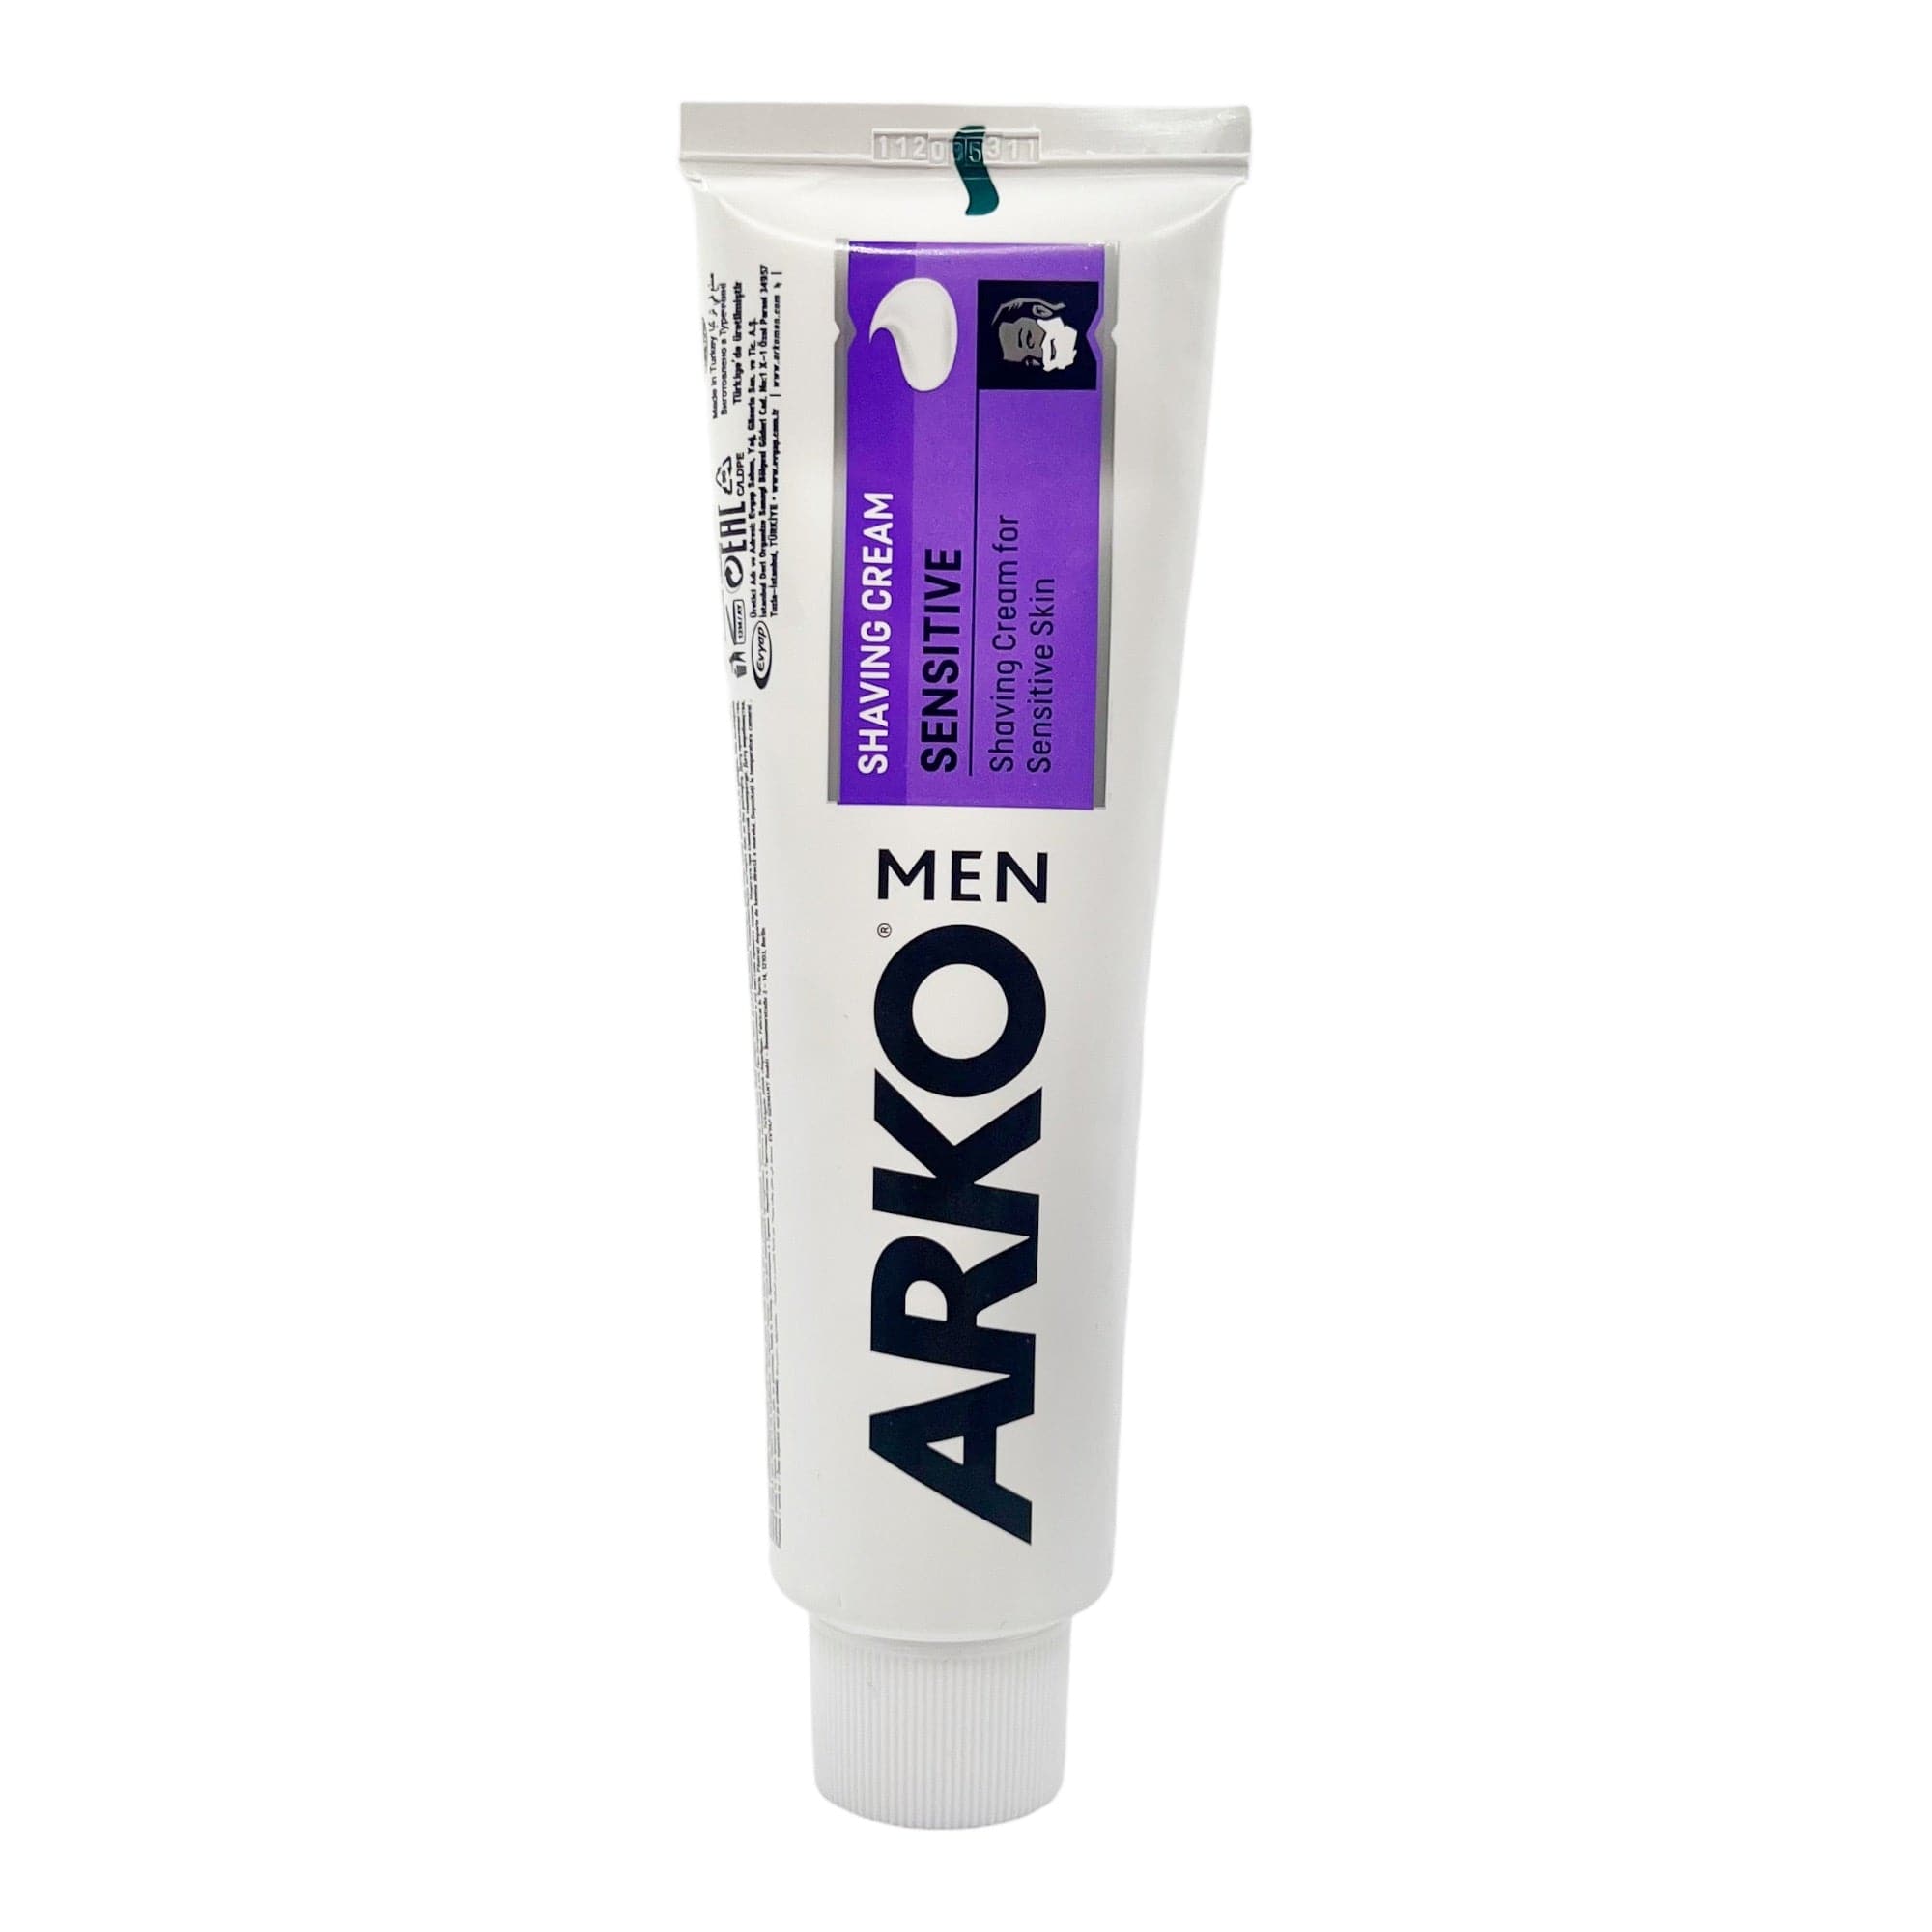 Arko - Men Shaving Cream Sensitive 100g - Eson Direct